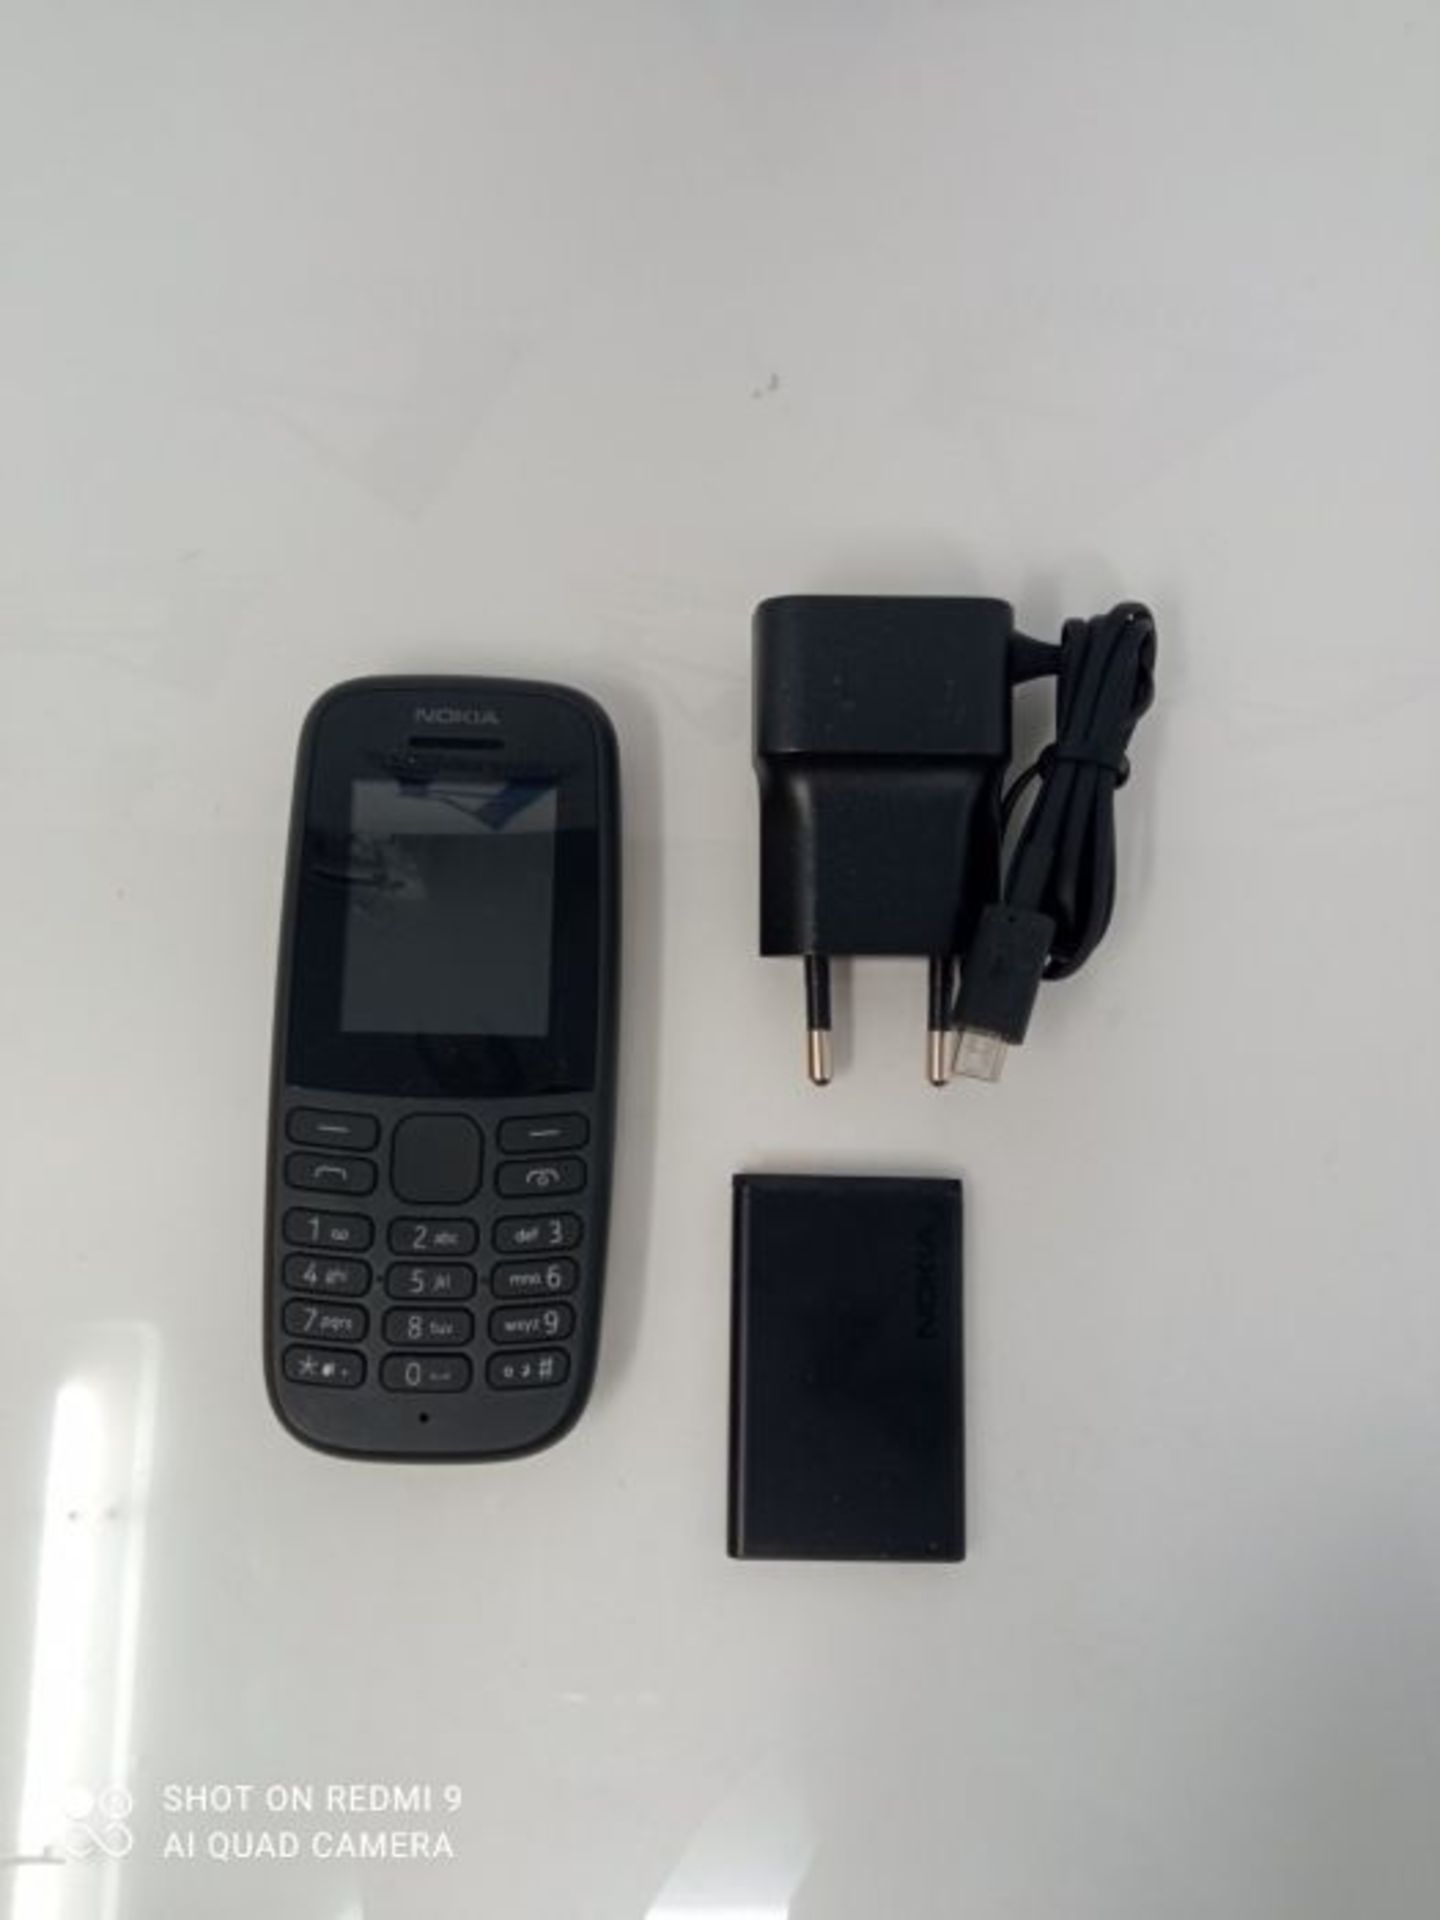 Nokia 105 Mobiltelefon (1, 8 Zoll Farbdisplay, FM Radio, 4 MB ROM, Dual-Sim) Schwarz, - Image 2 of 2